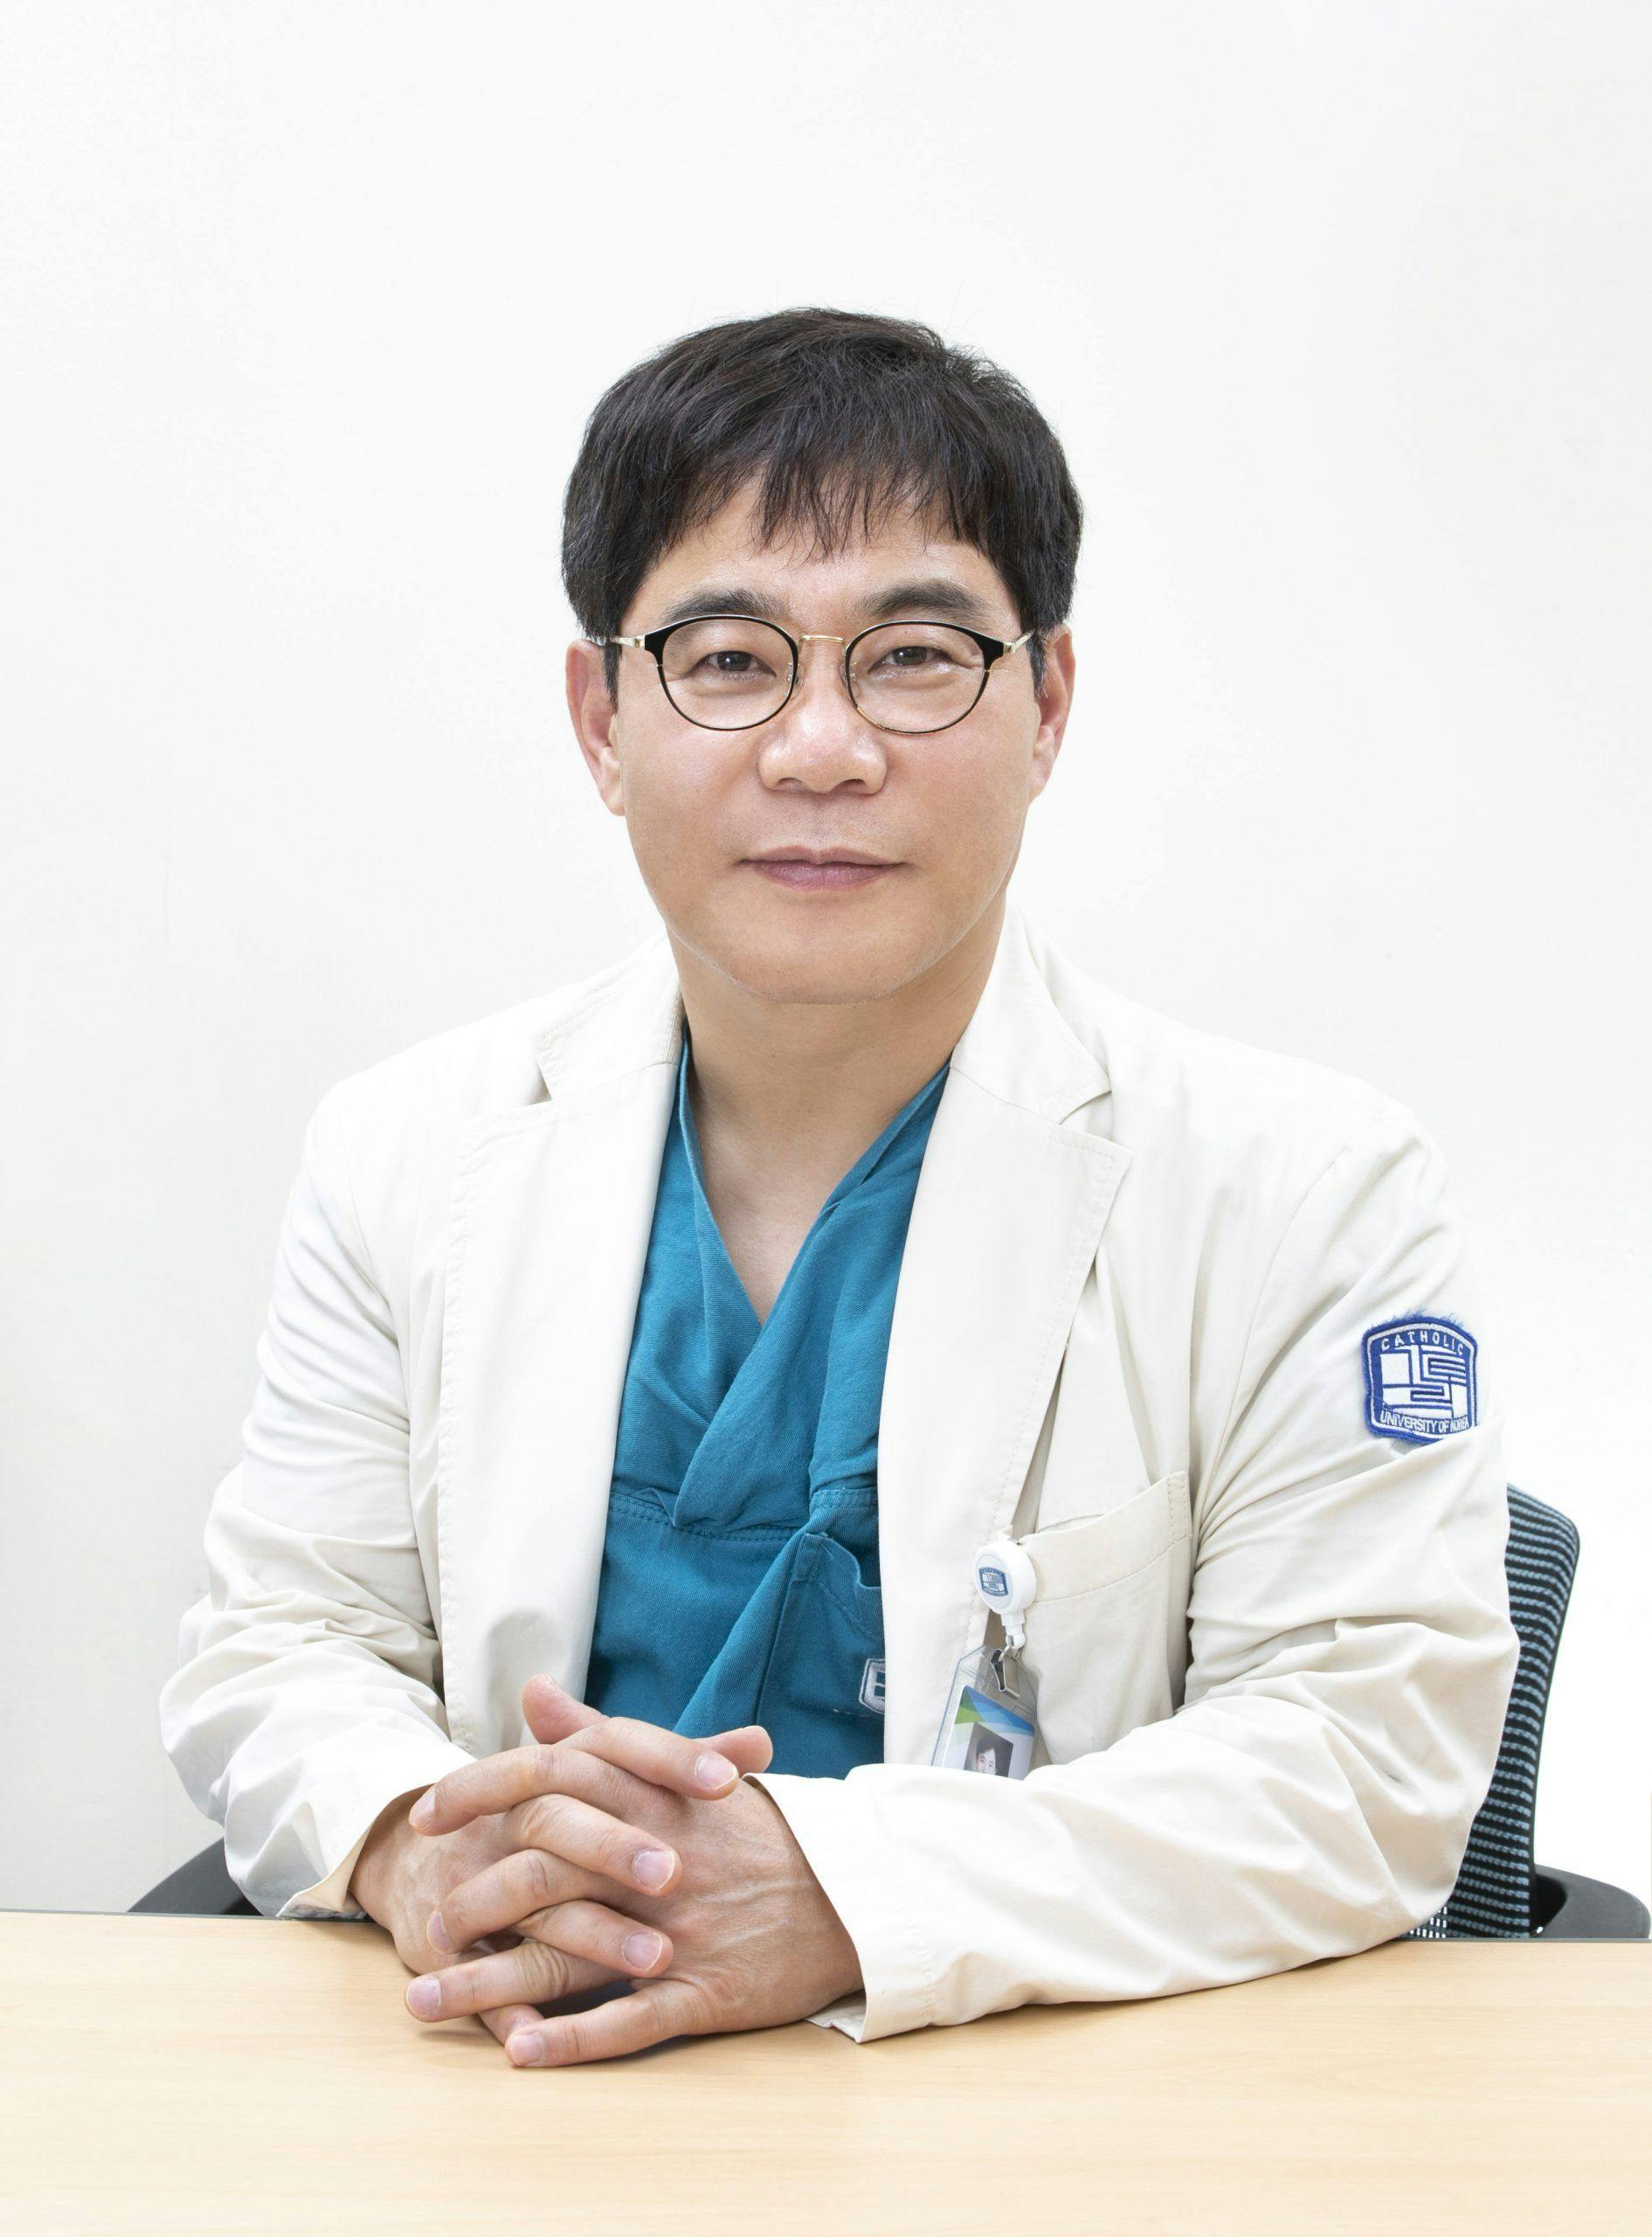 Kiyuk Chang, MD, professor of Cardiology, Division of Internal Medicine at the Catholic University of Korea